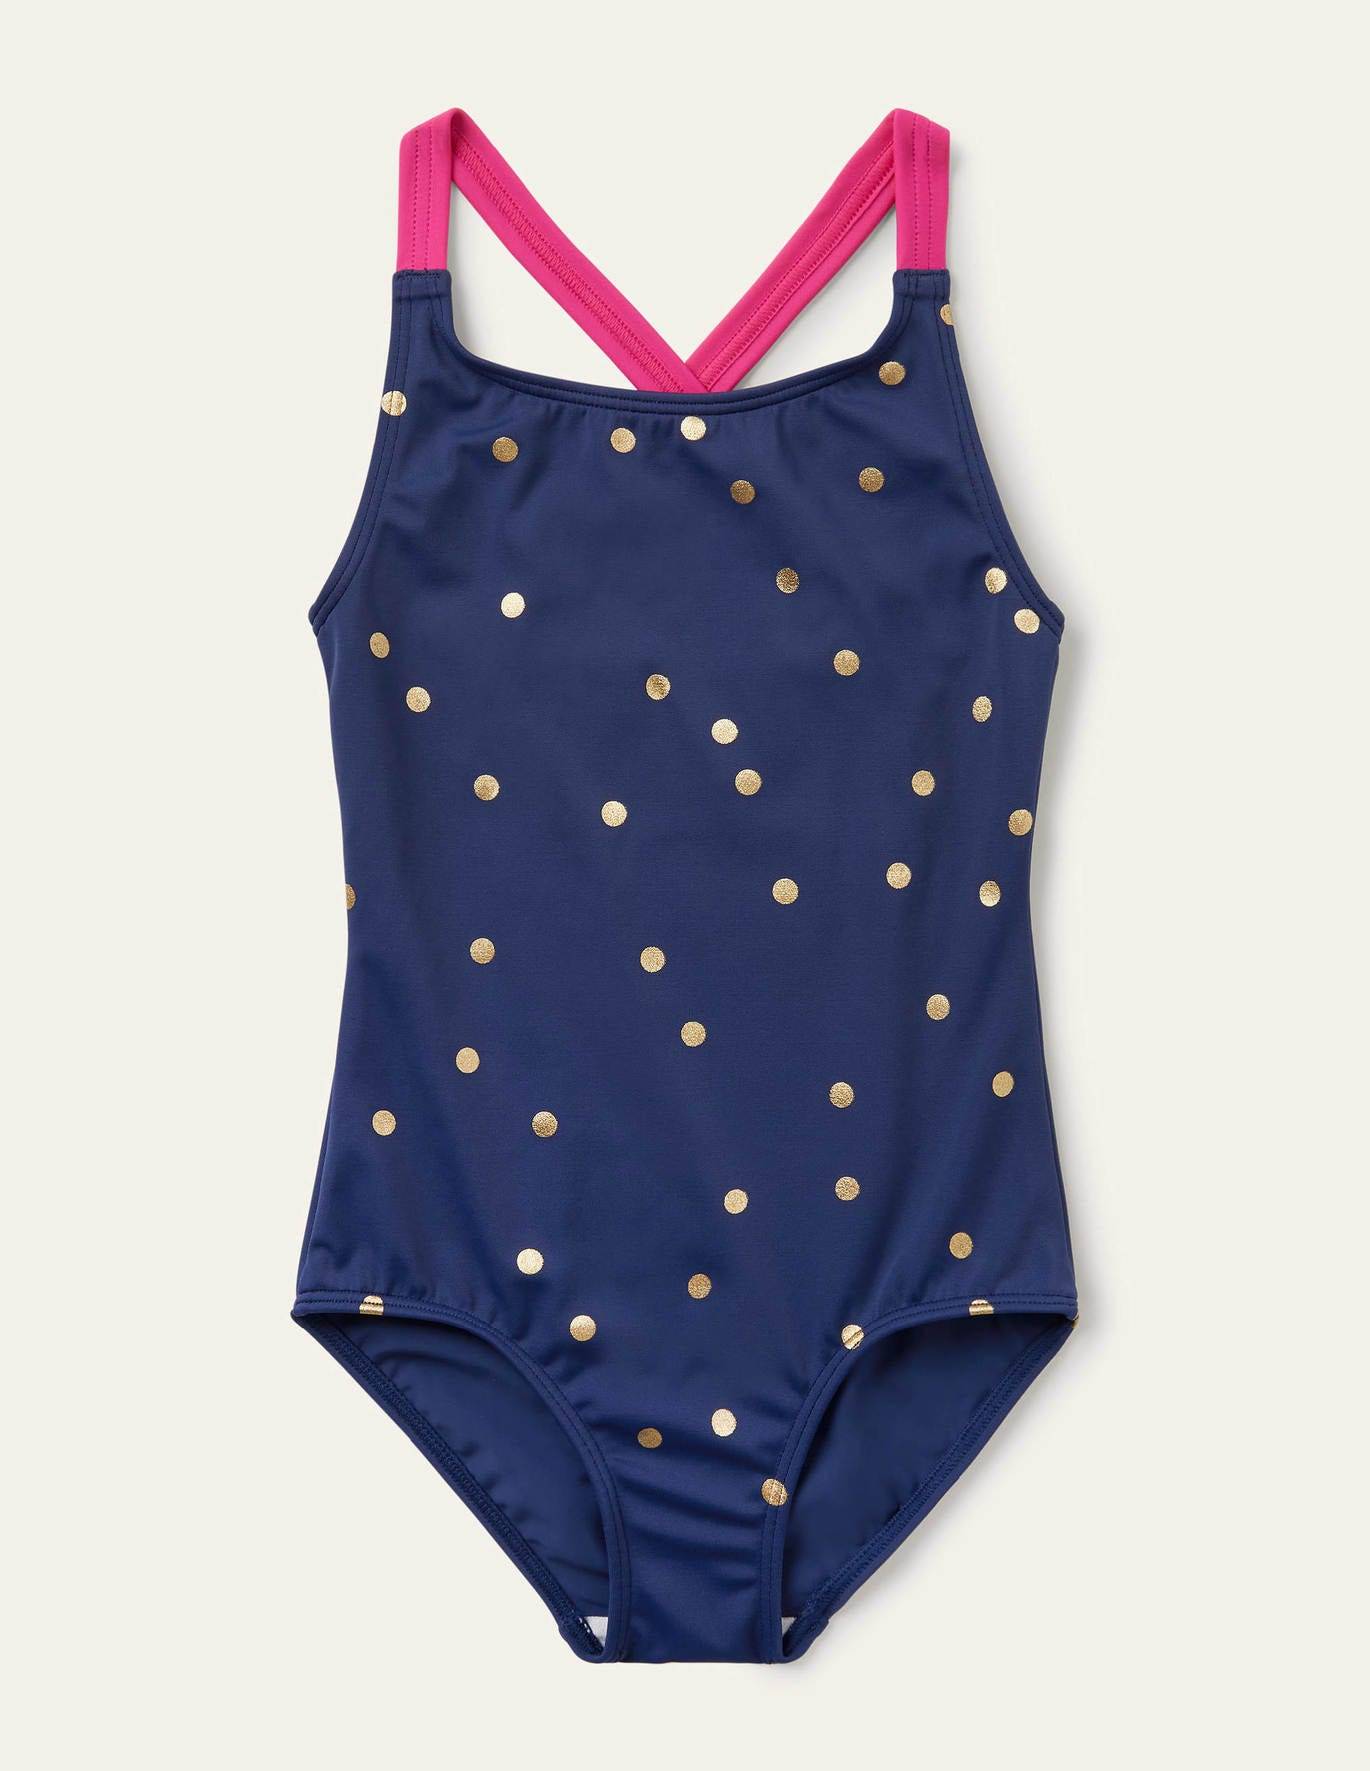 Shybuy Newborn One Piece Swimsuit Baby Girl Swimsuit Toddler Swimwear Newborn Swimming Suit Bikini One Pieces